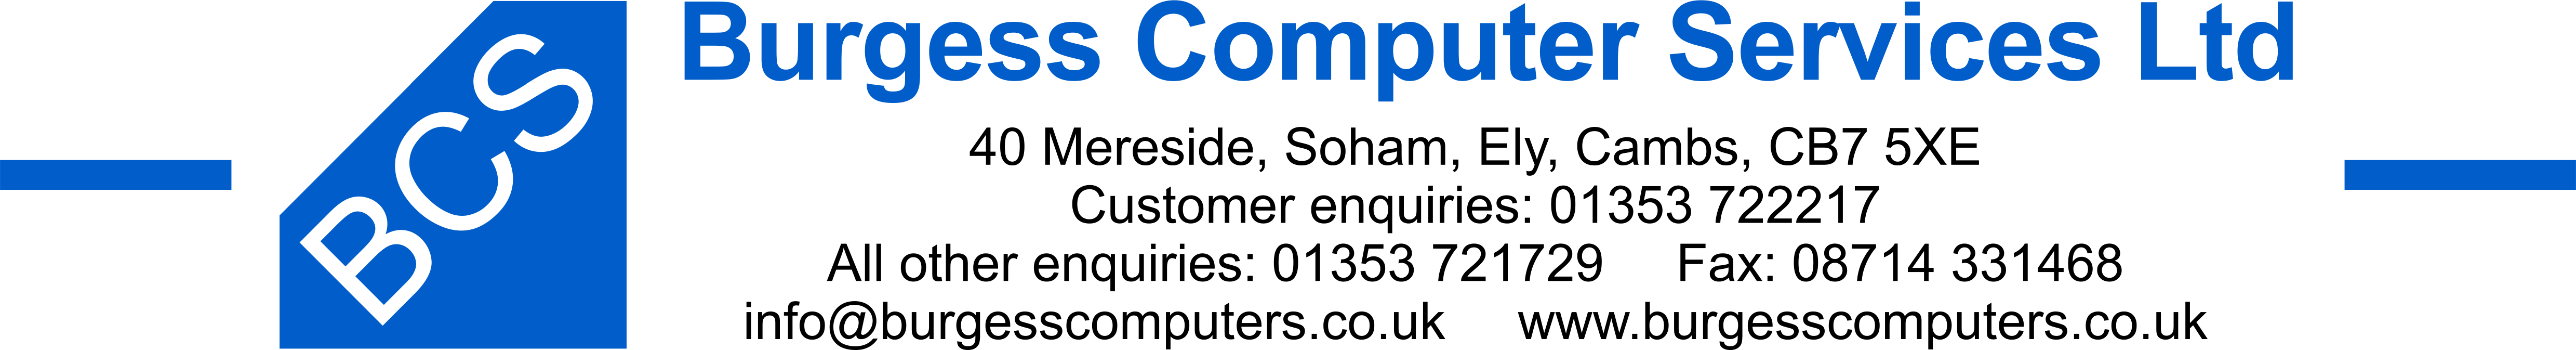 Burgess Computer Services Ltd